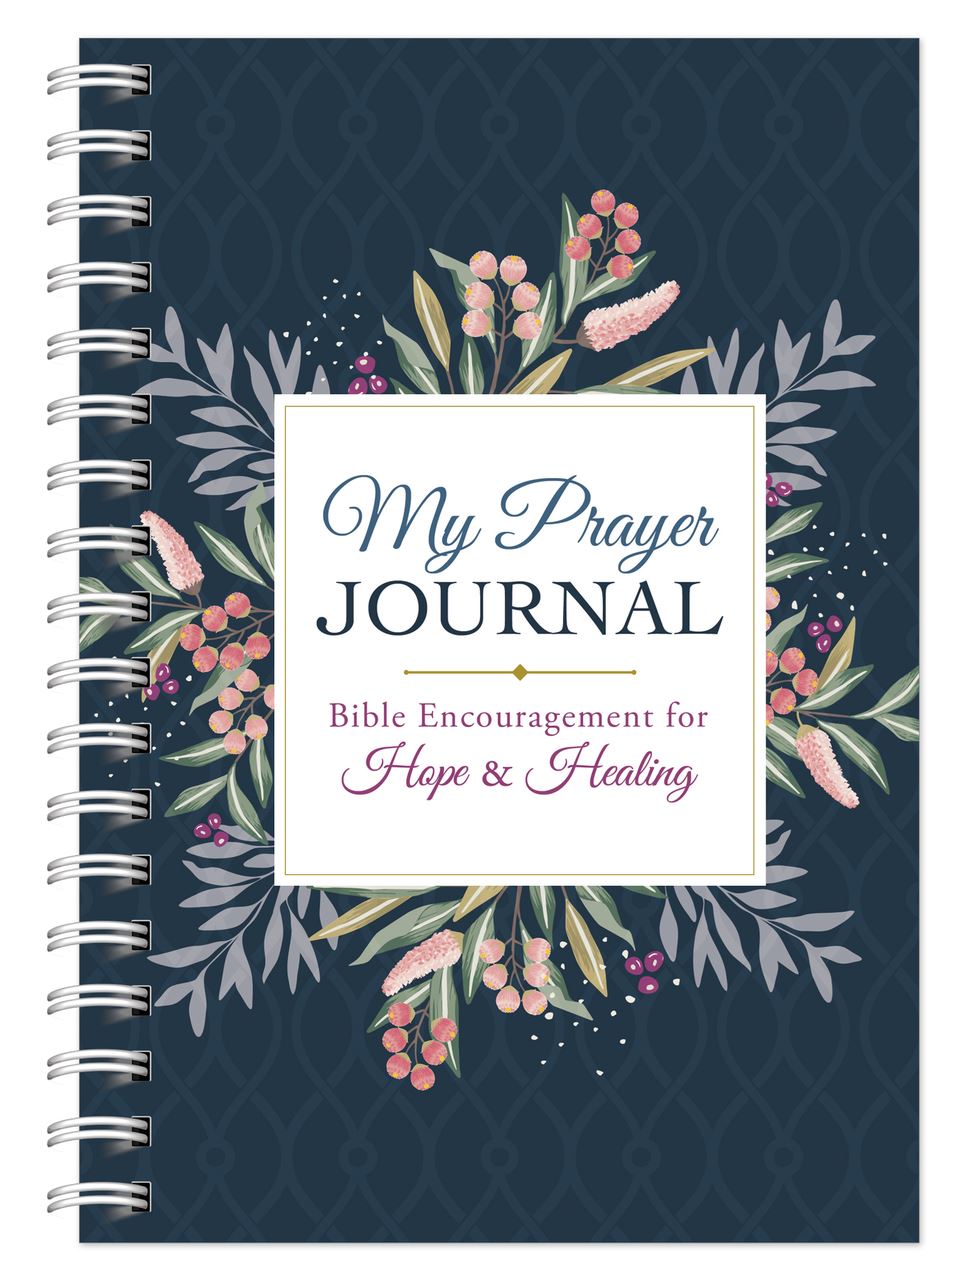 My Prayer Journal: Bible Encouragement for Hope & Healing